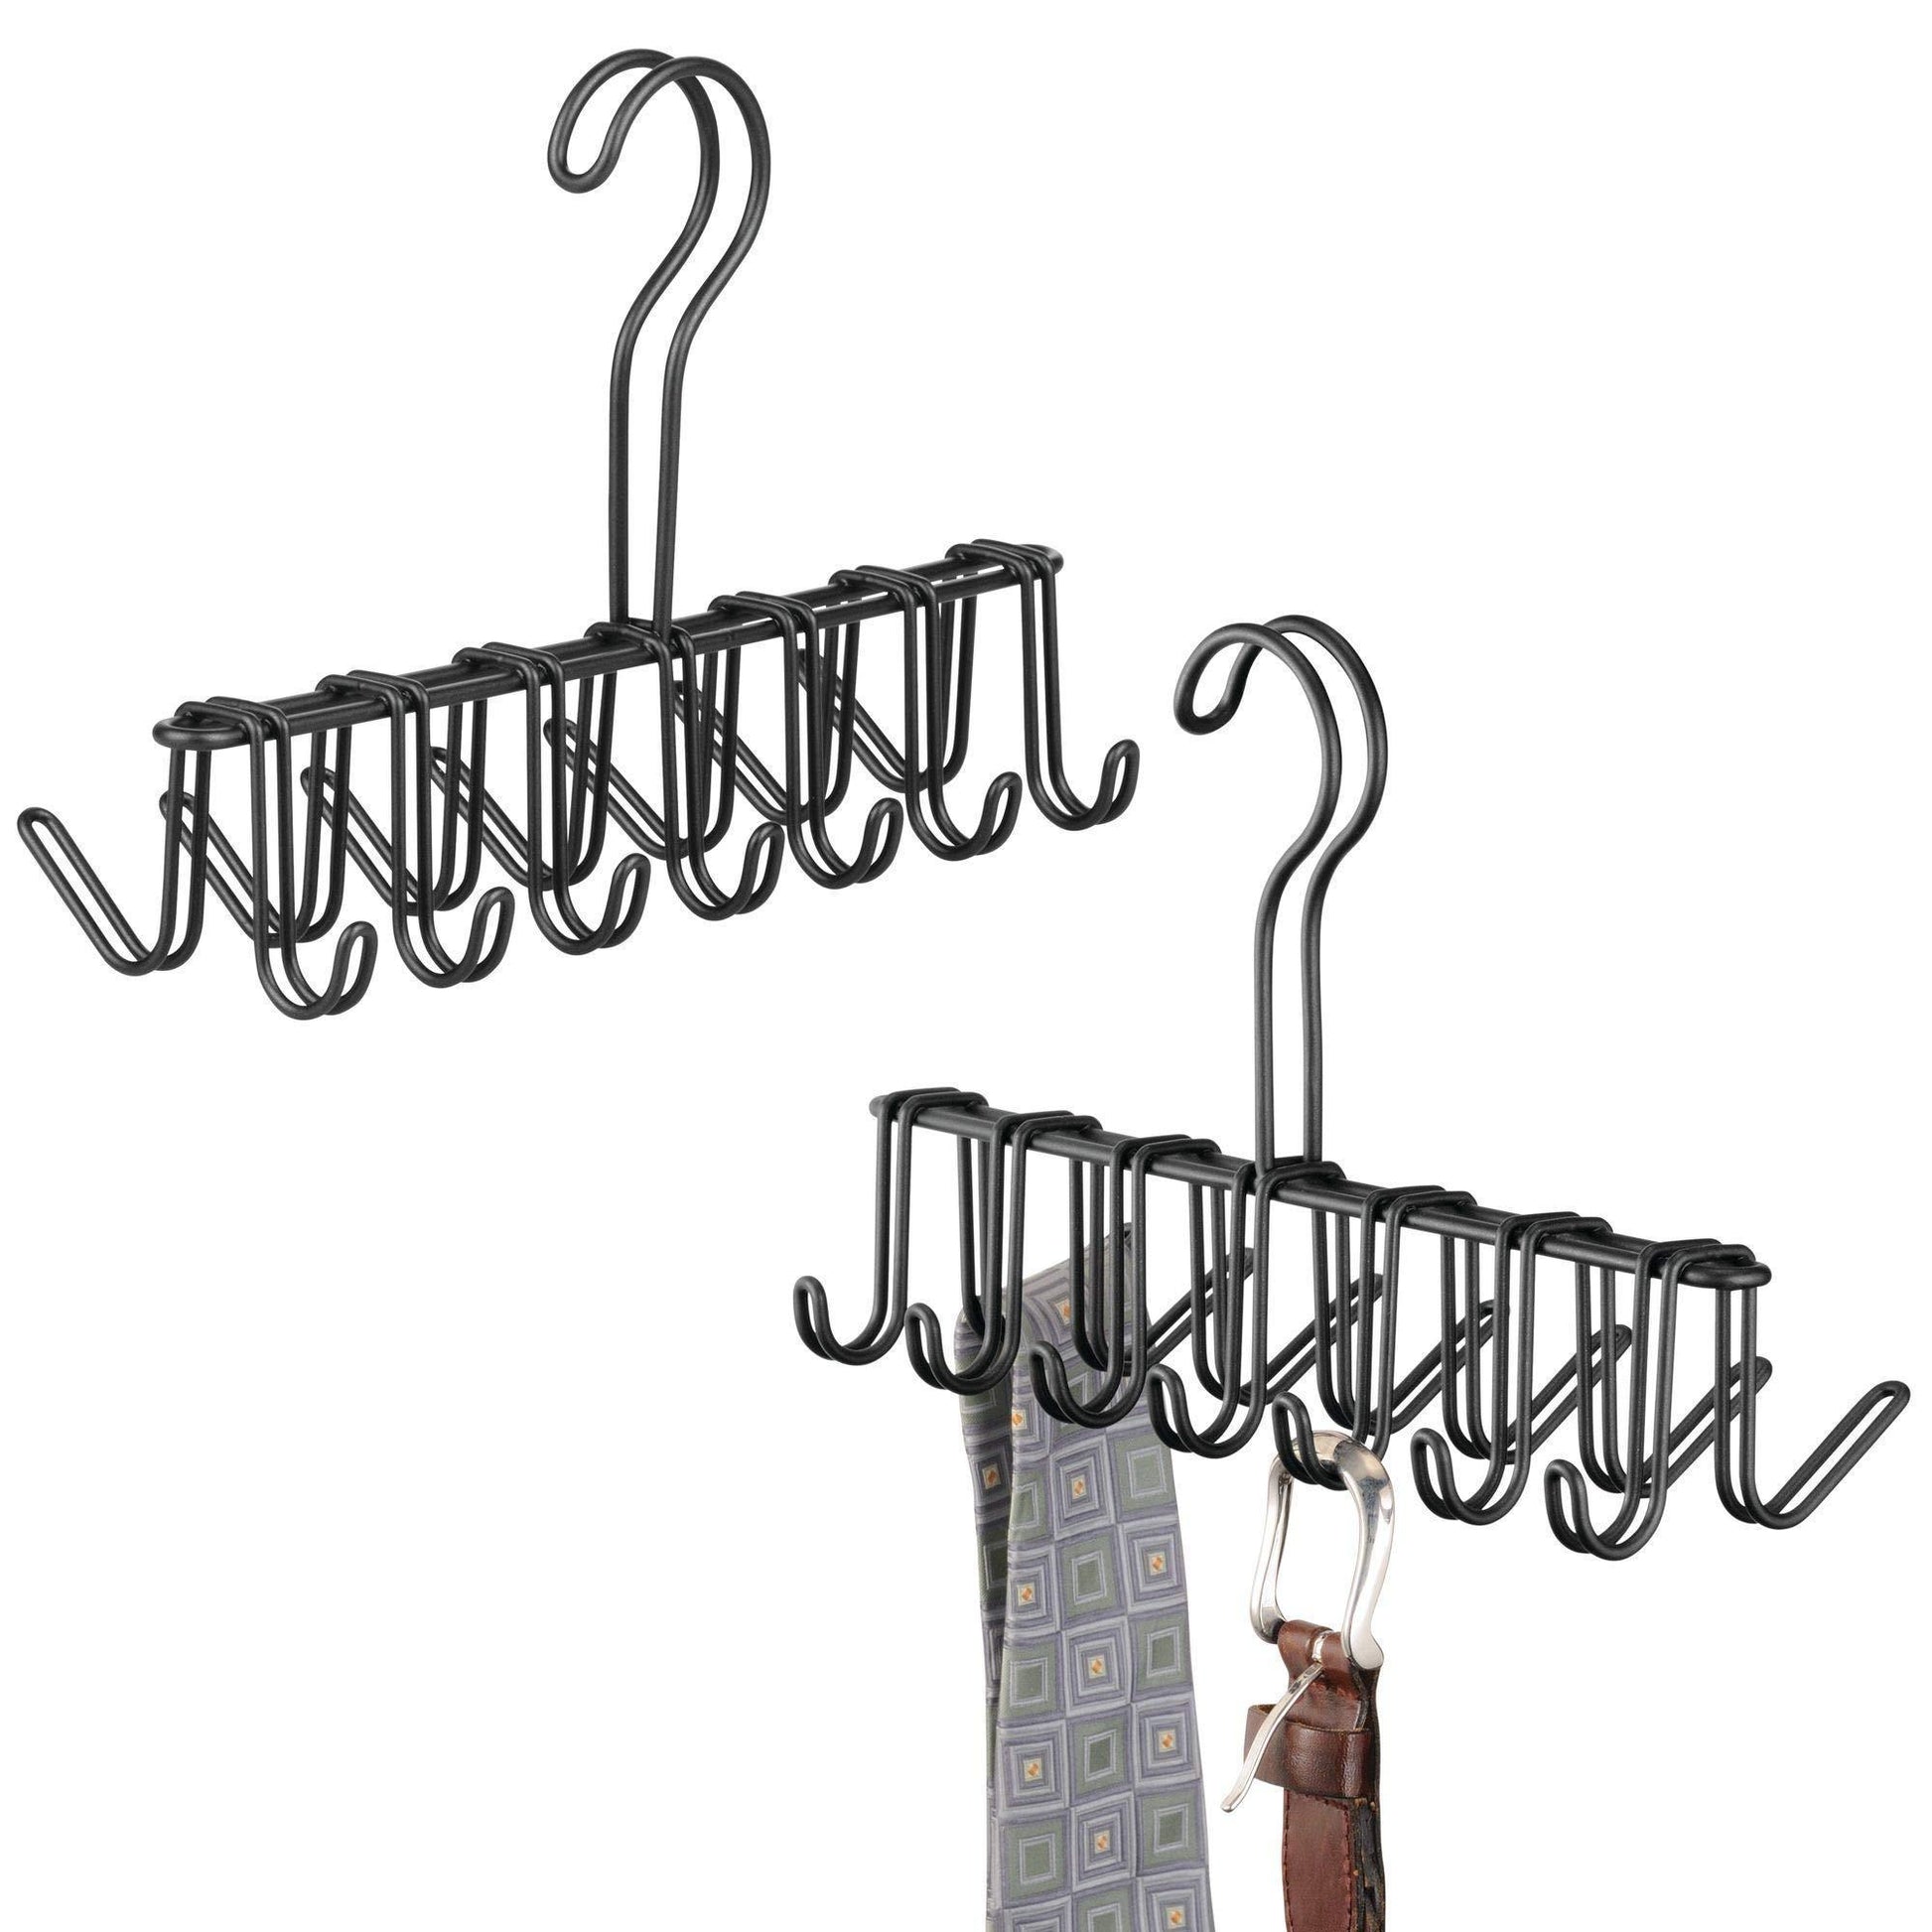 Top rated mdesign over the rod closet rack hanger for ties belts scarves pack of 2 matte black